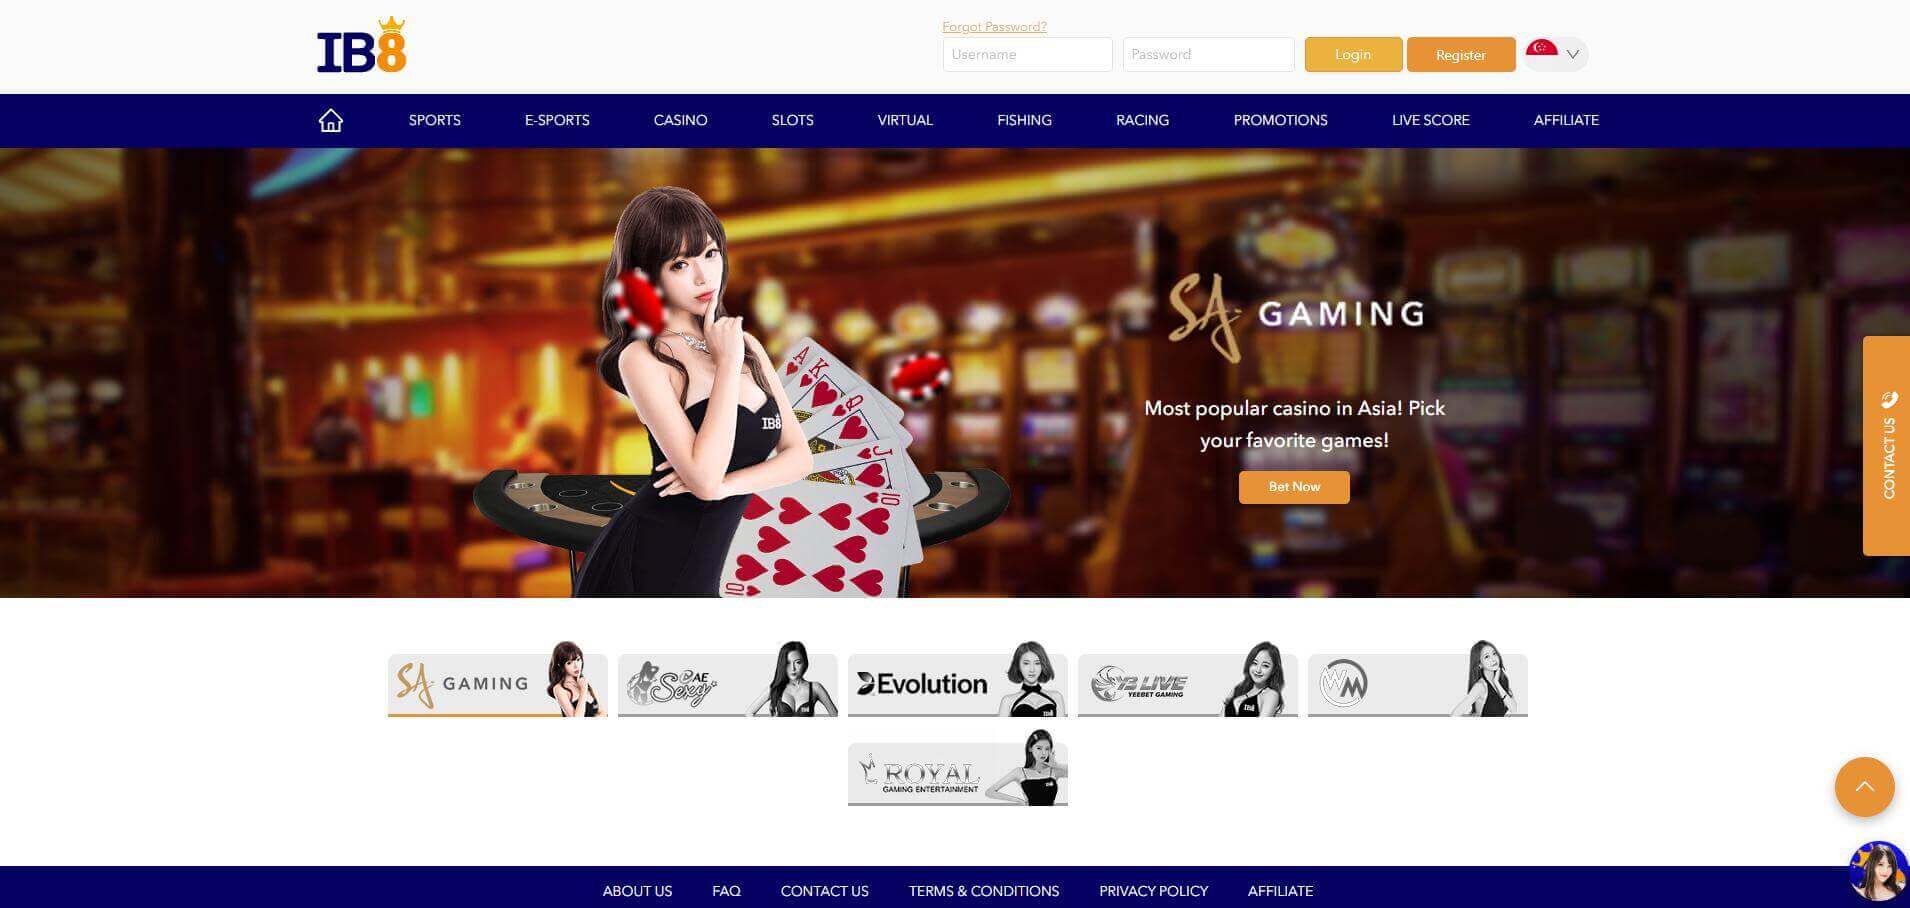 ib8 online casino